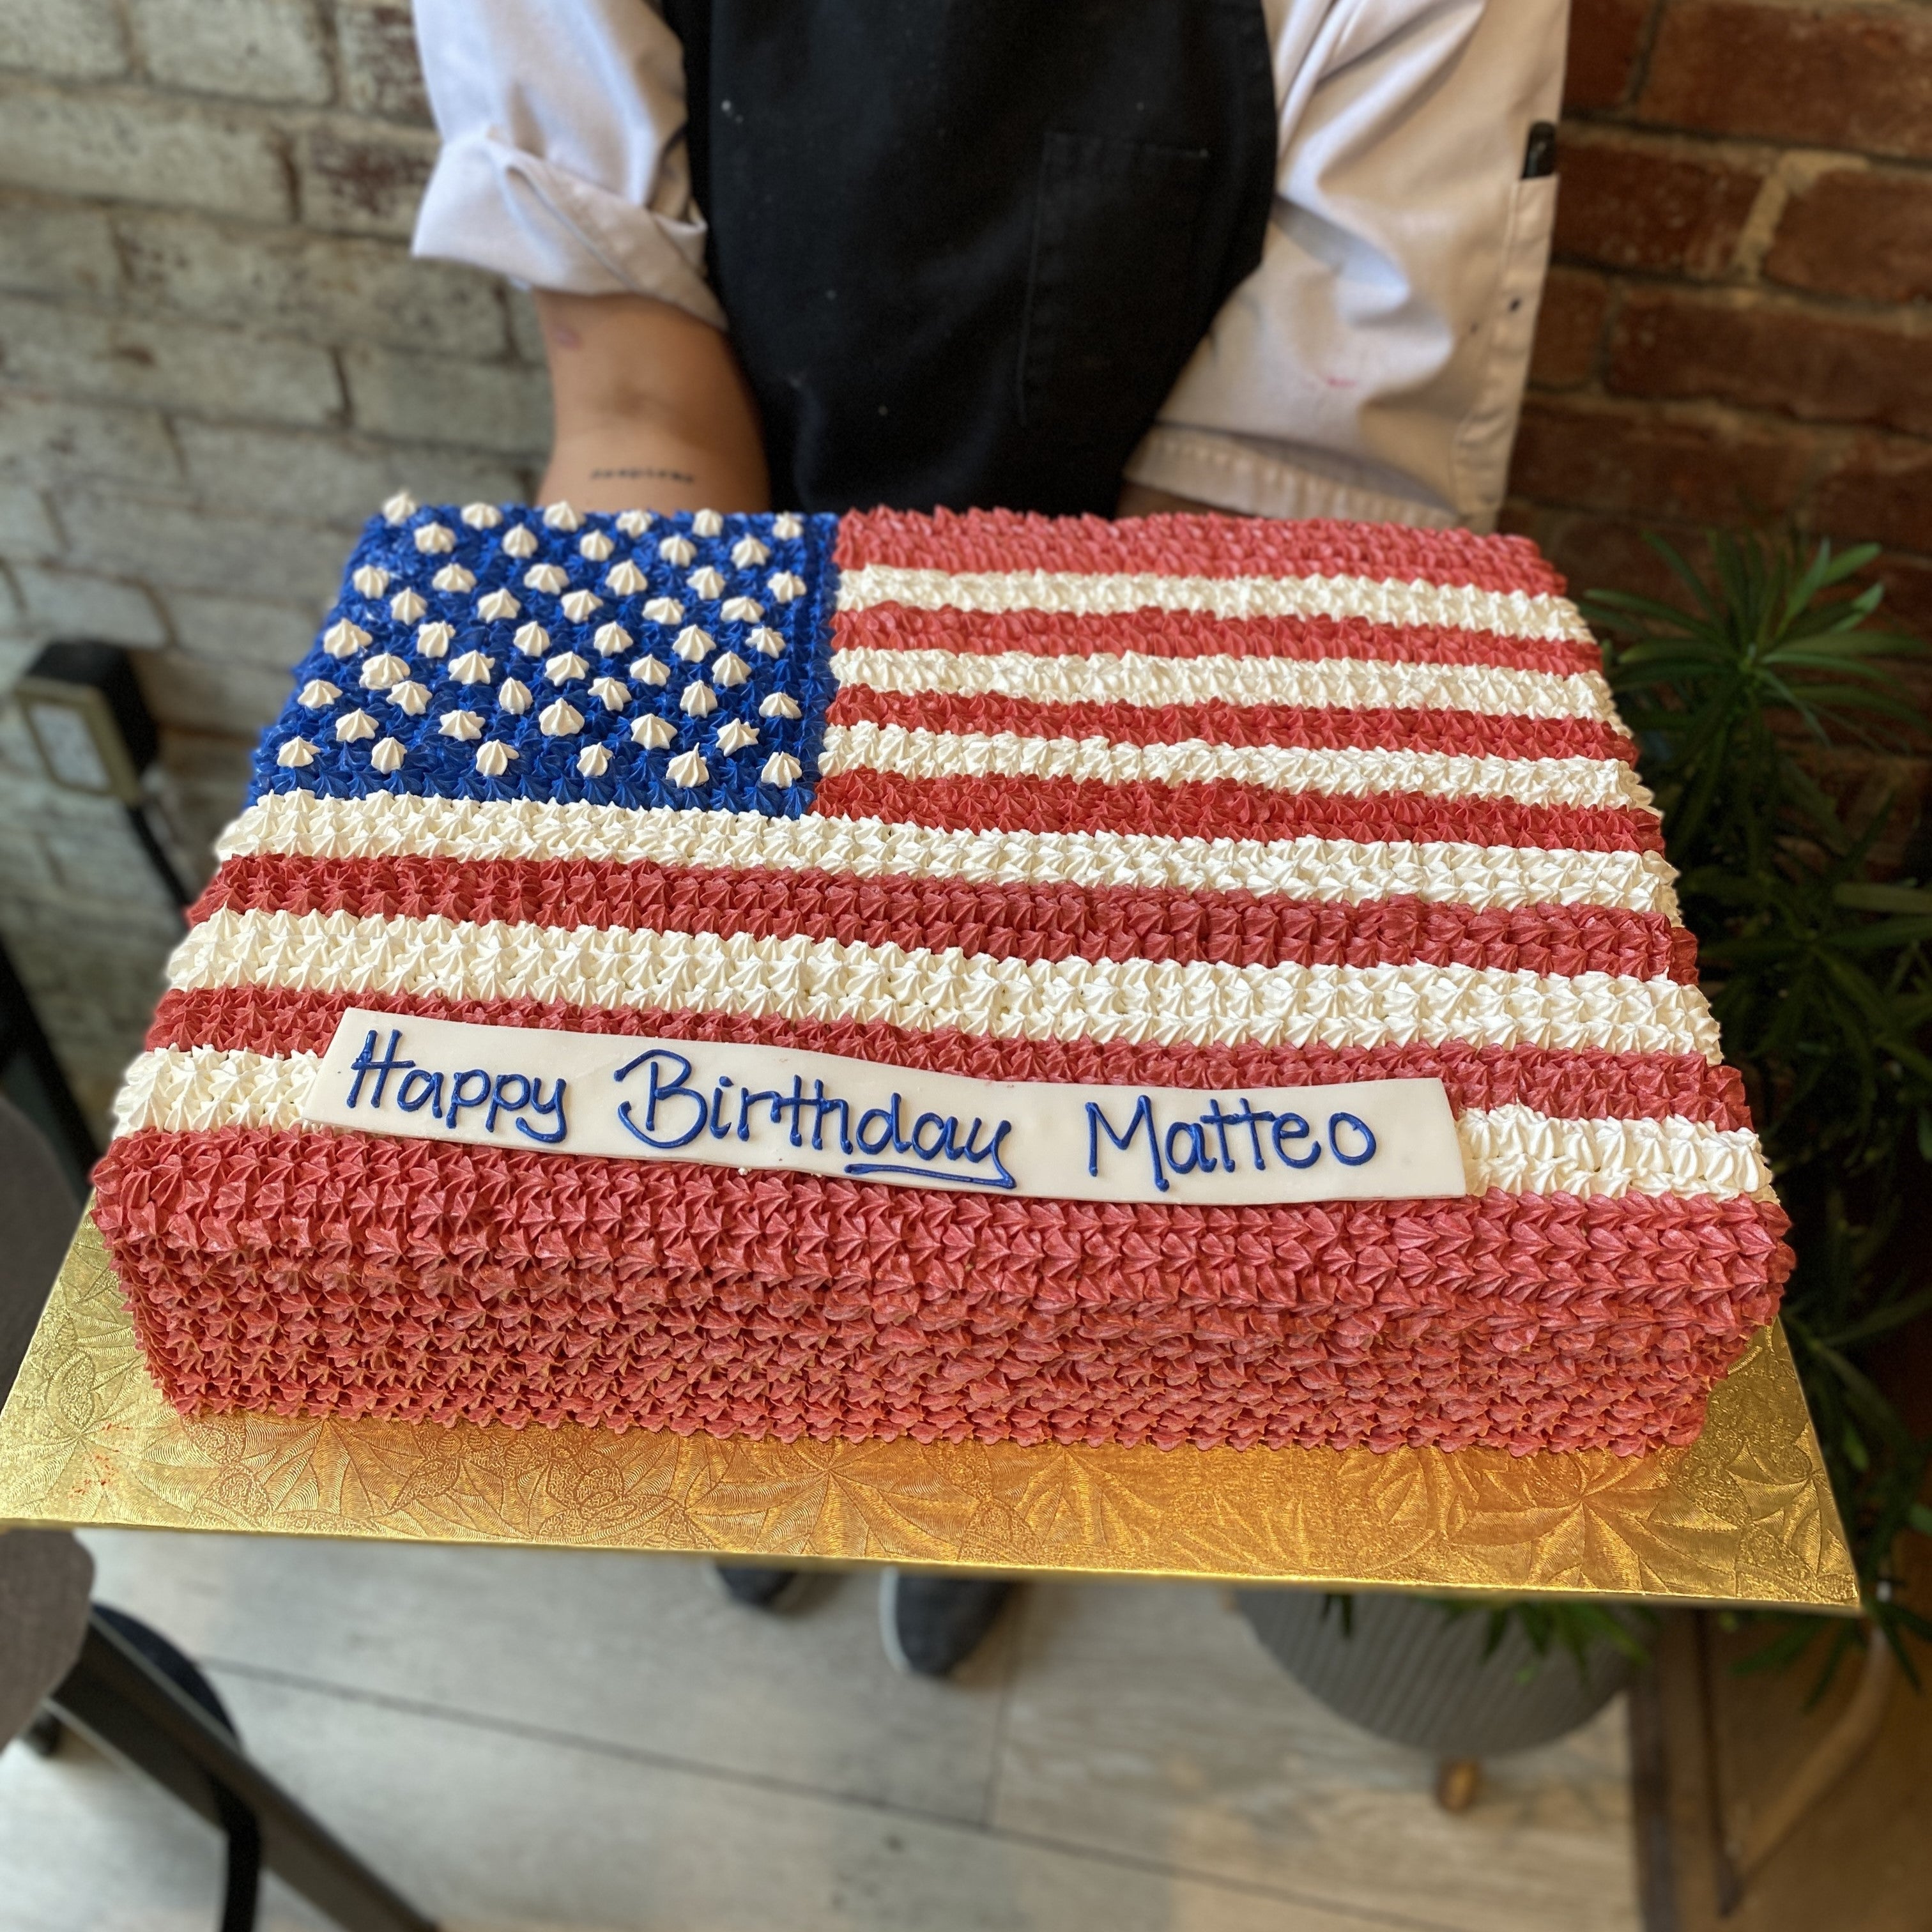 i heart cakes - American flag cake | Facebook